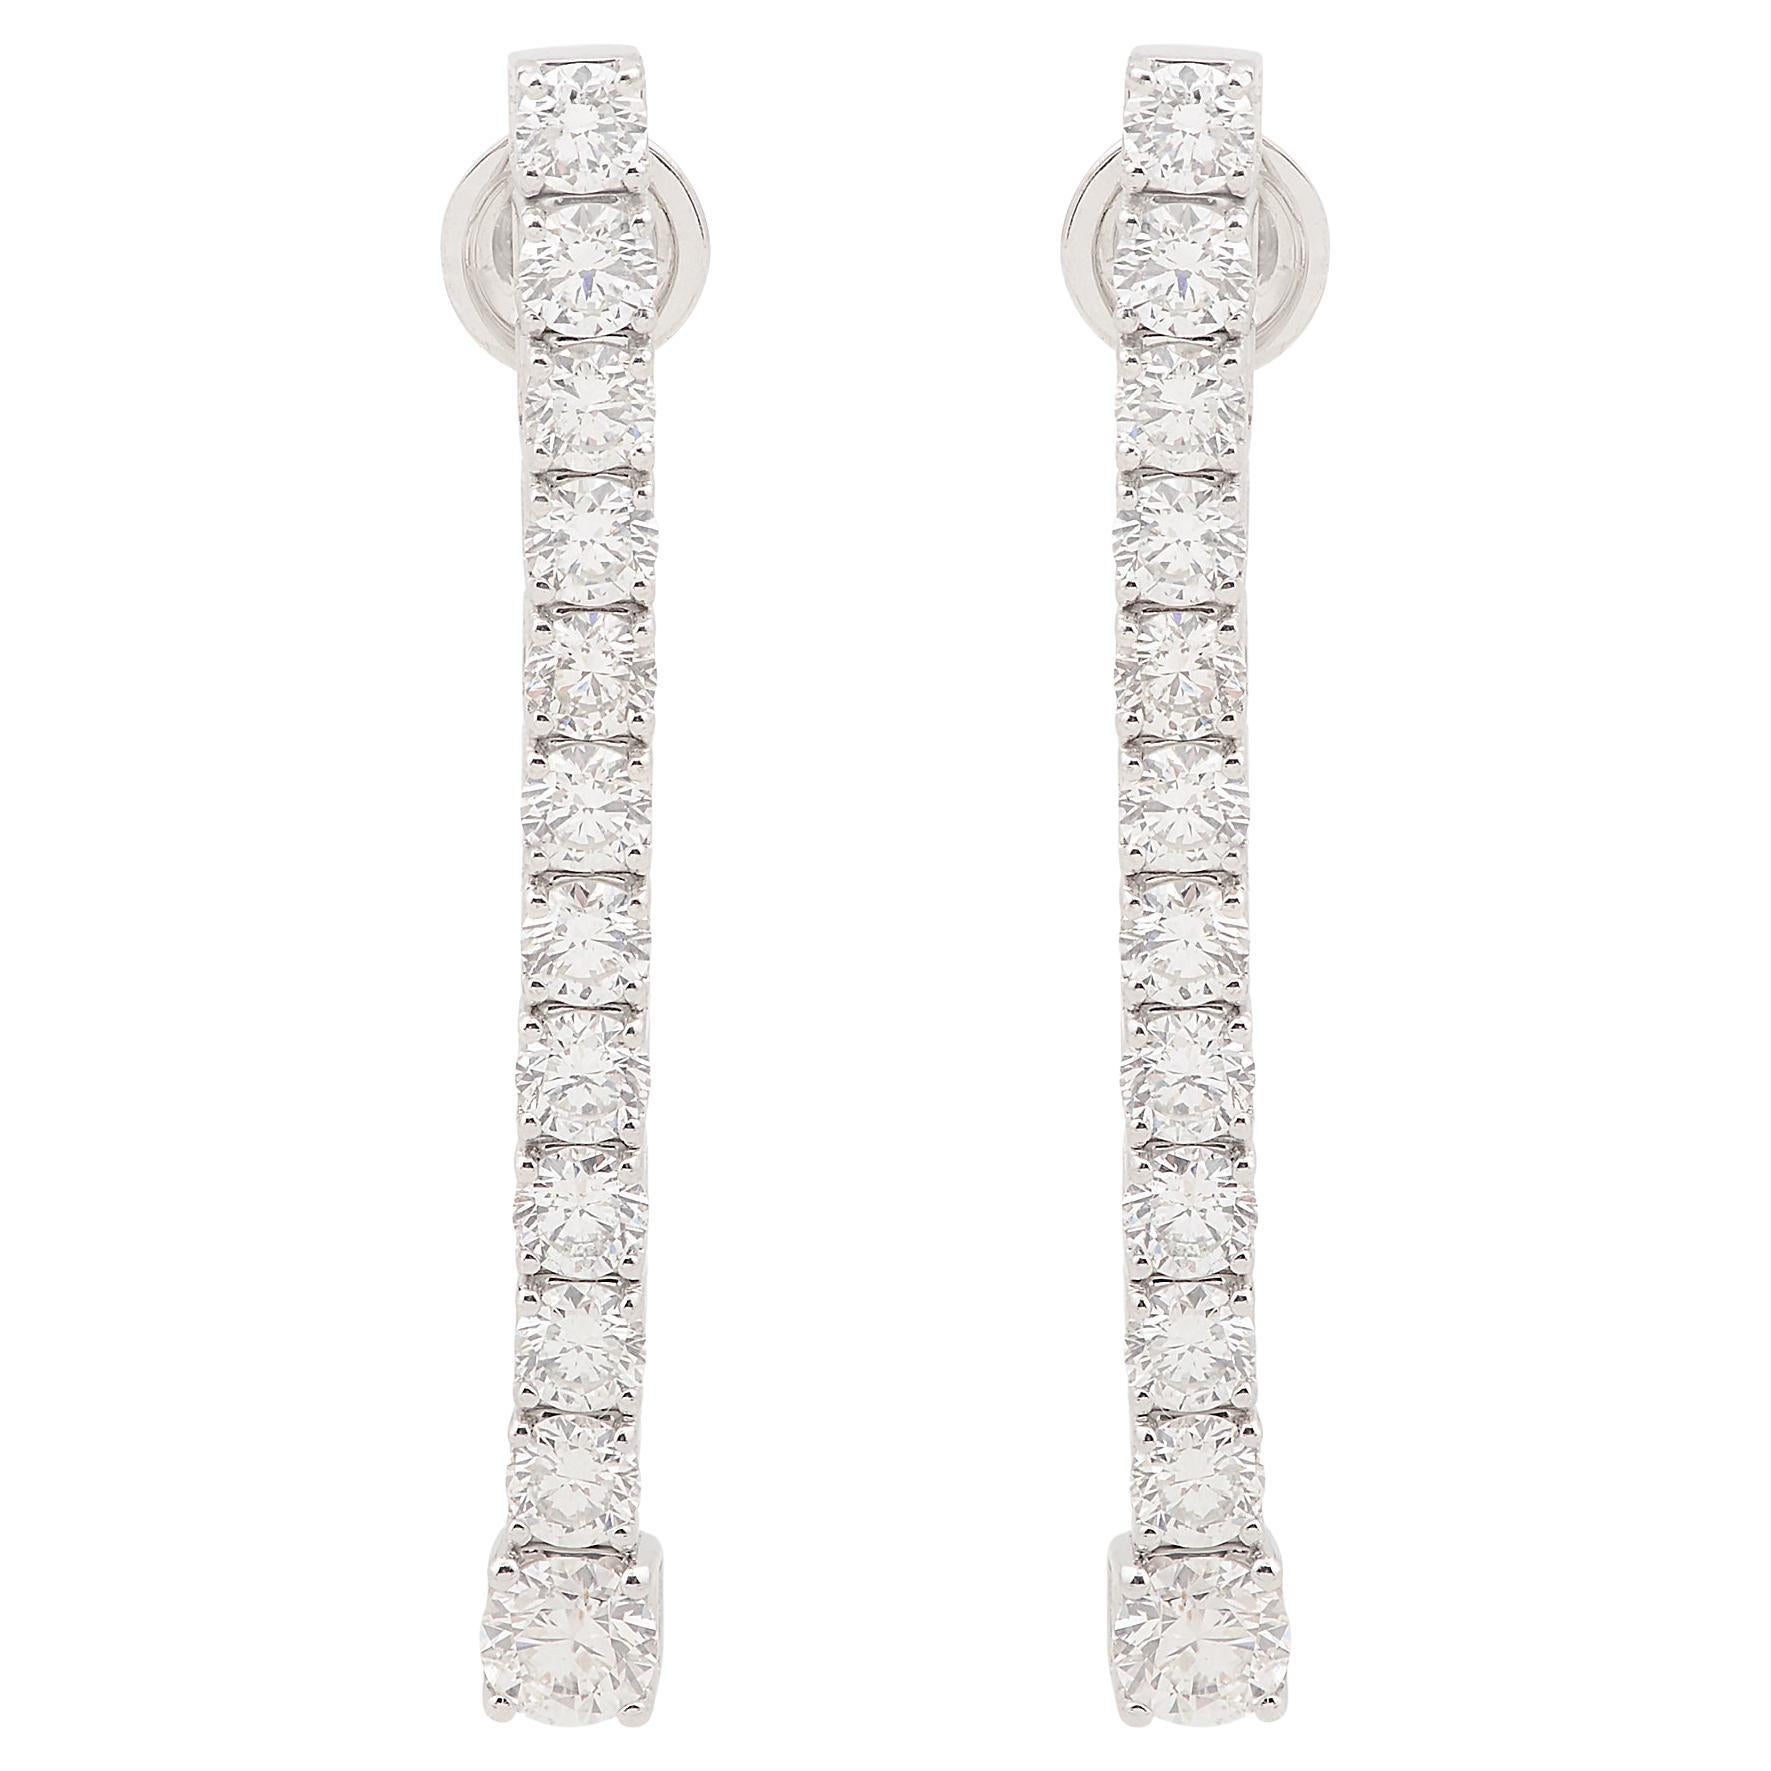 3.30 Carat Diamond Bar Dangle Earrings Solid 18k White Gold Handmade Jewelry New